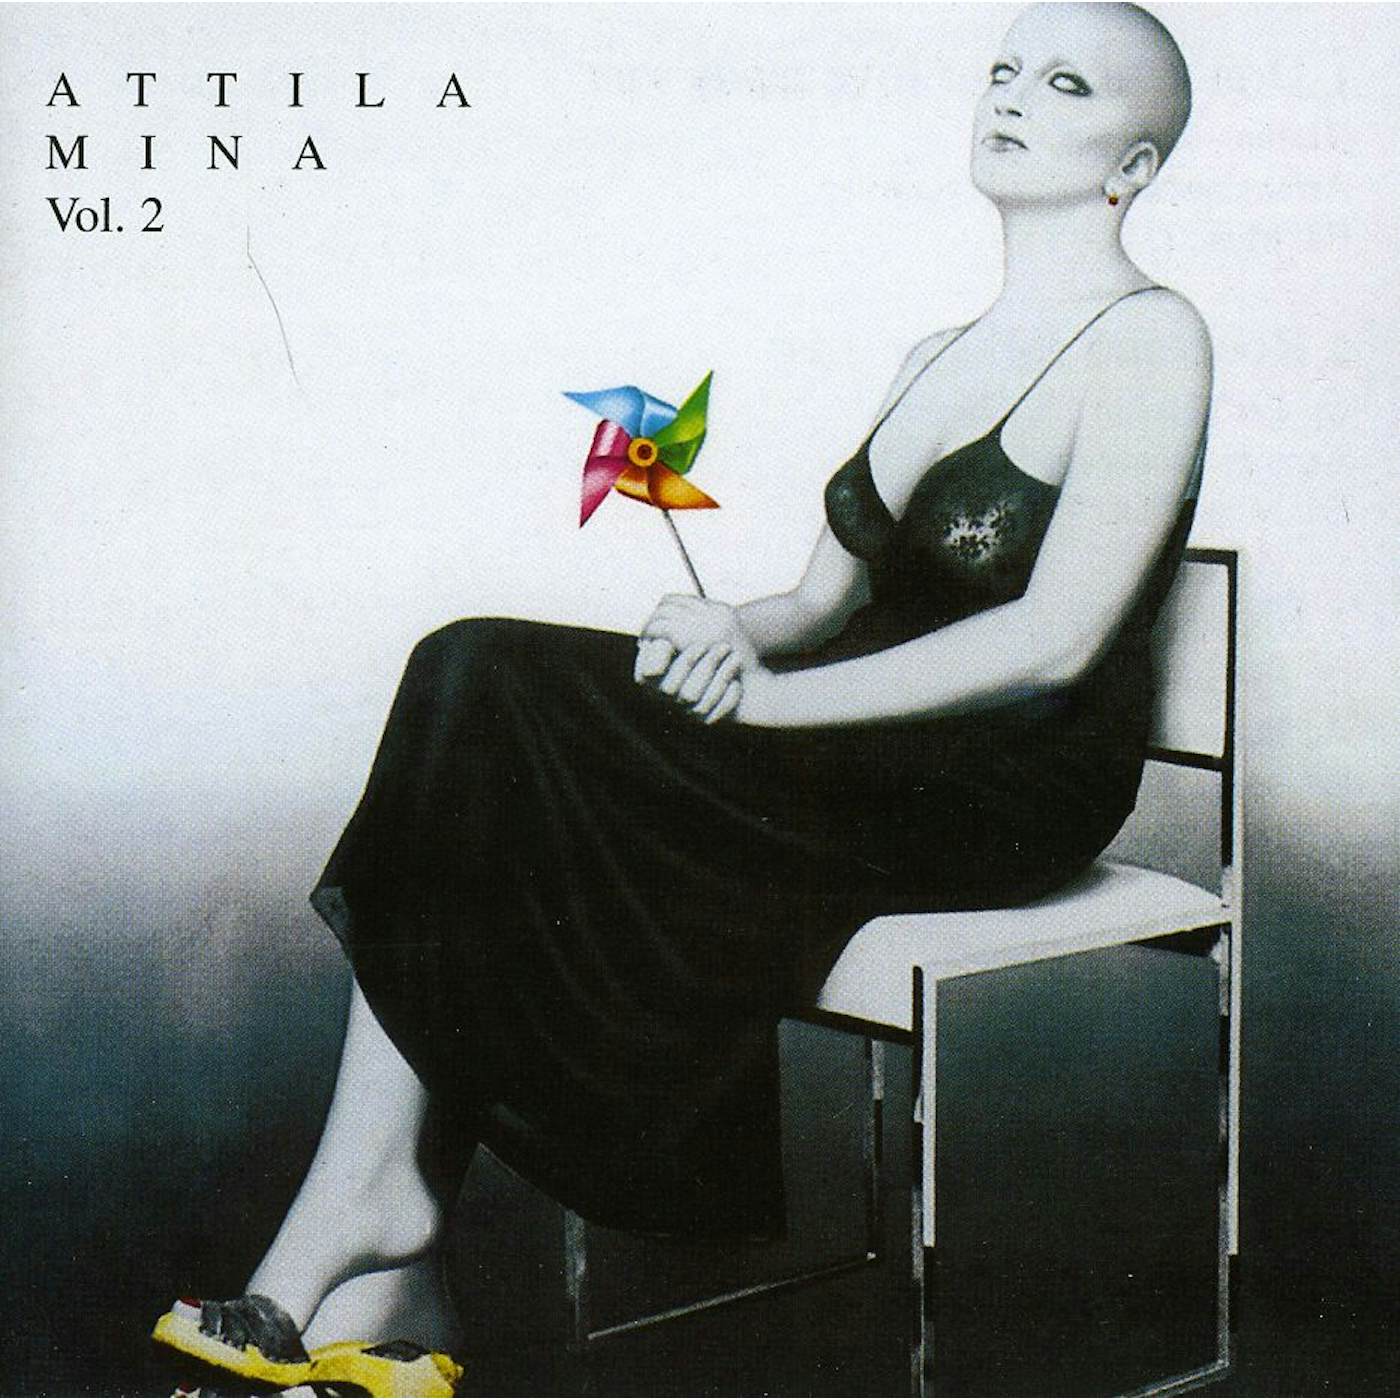 Mina ATTILA 2 CD